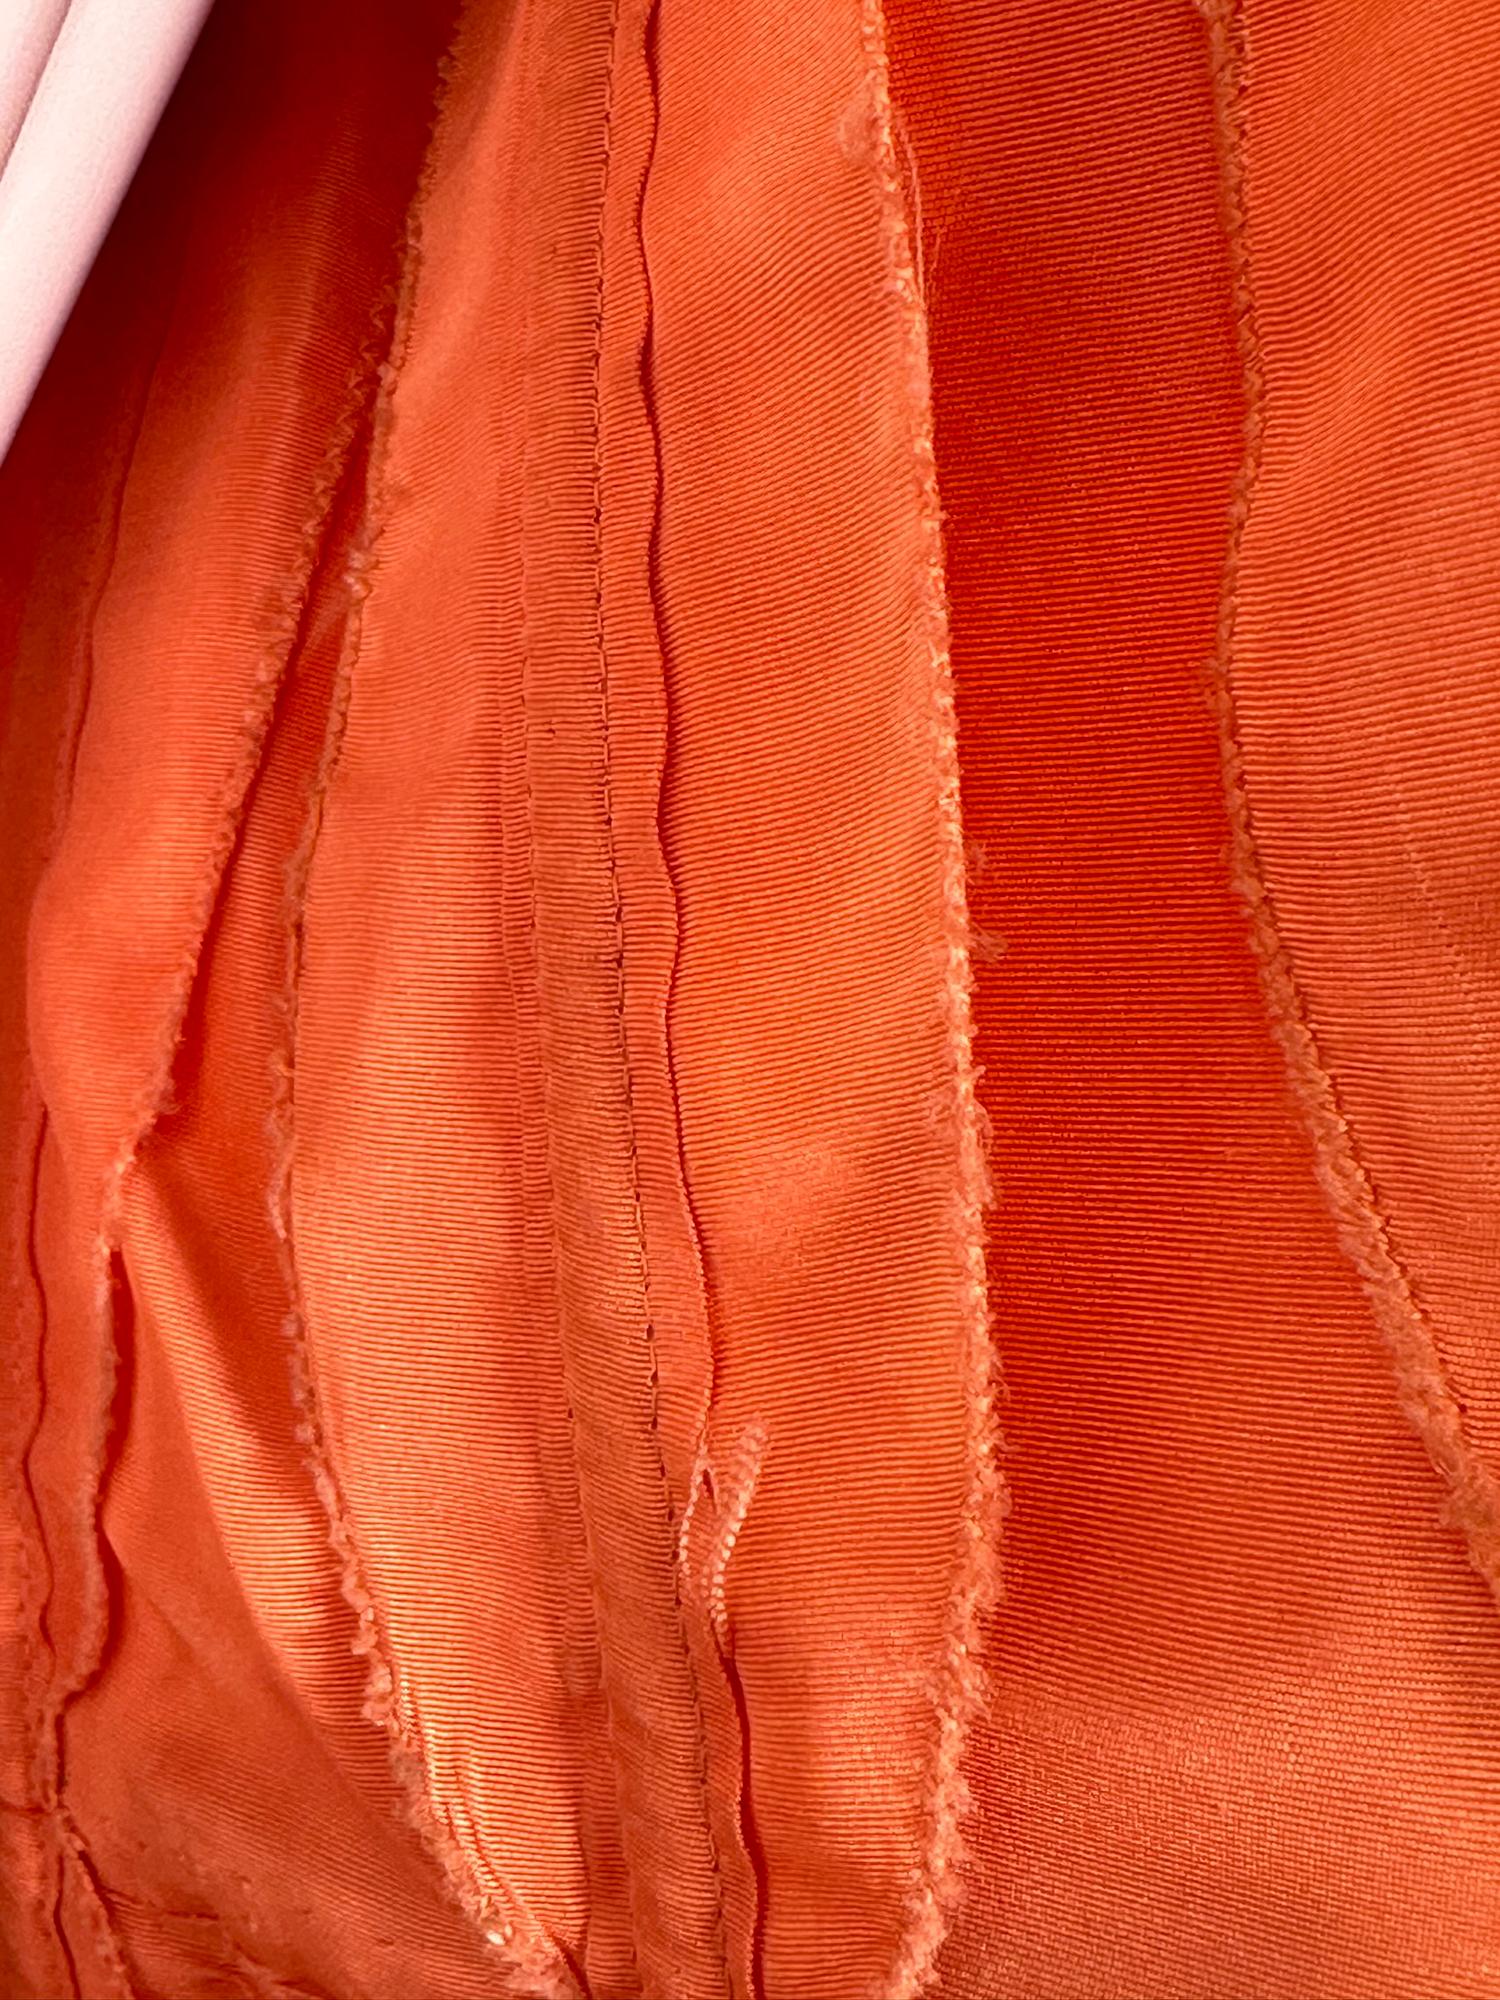 Lanvin Castello Haute Couture Coral Silk Brocade Coat & Dress Ensemble 1950s For Sale 11